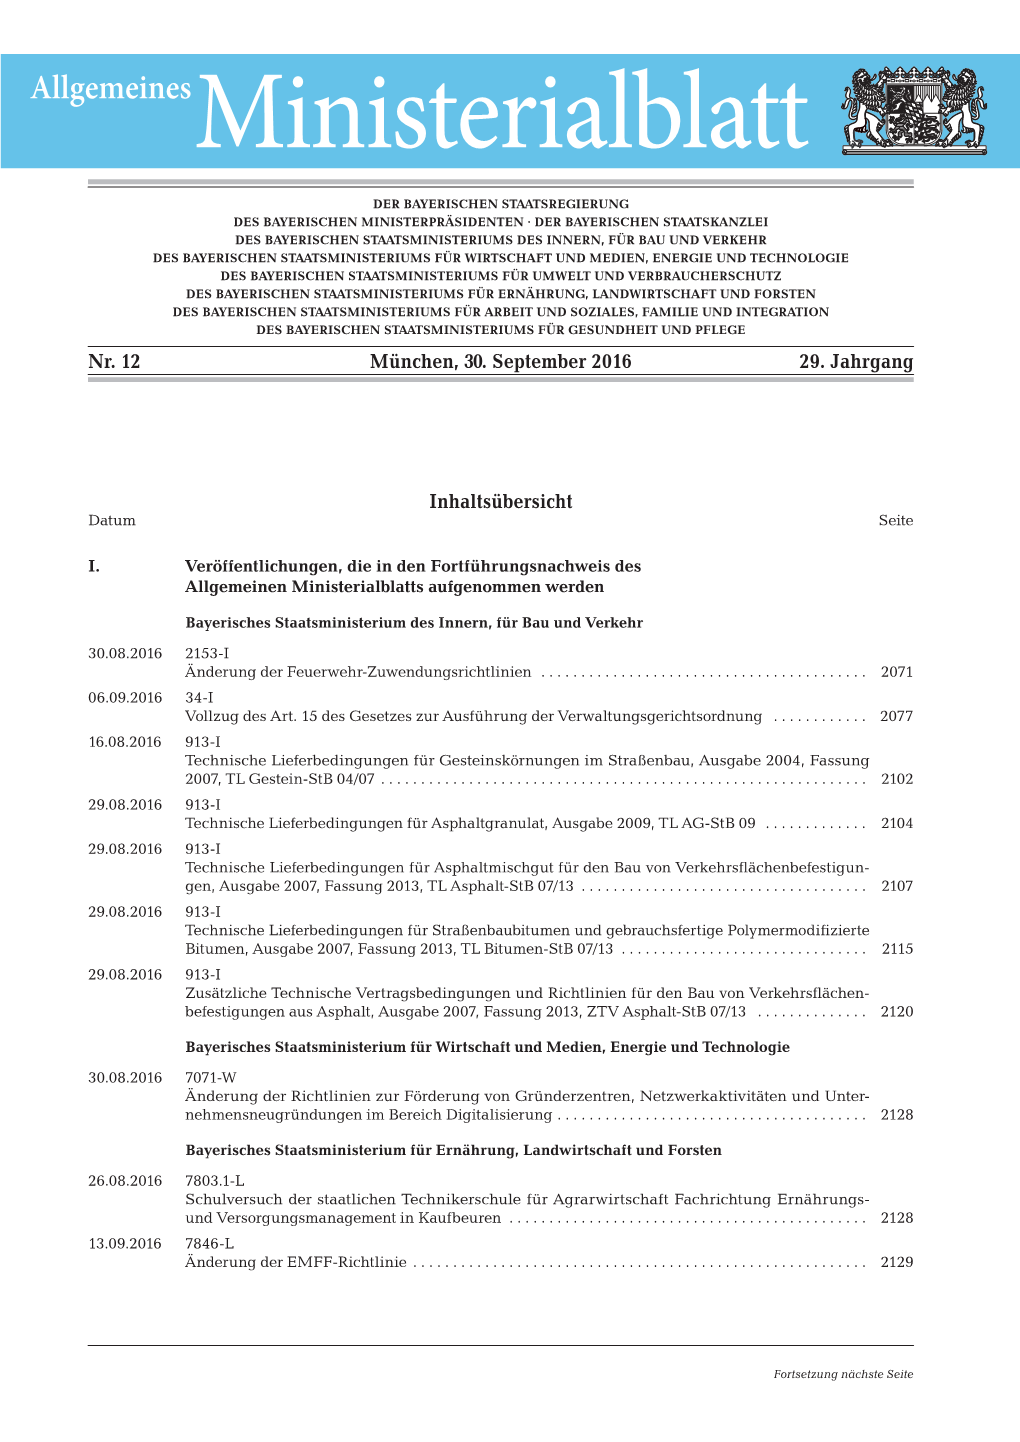 Allgemeines Ministerialblatt, 2016-12